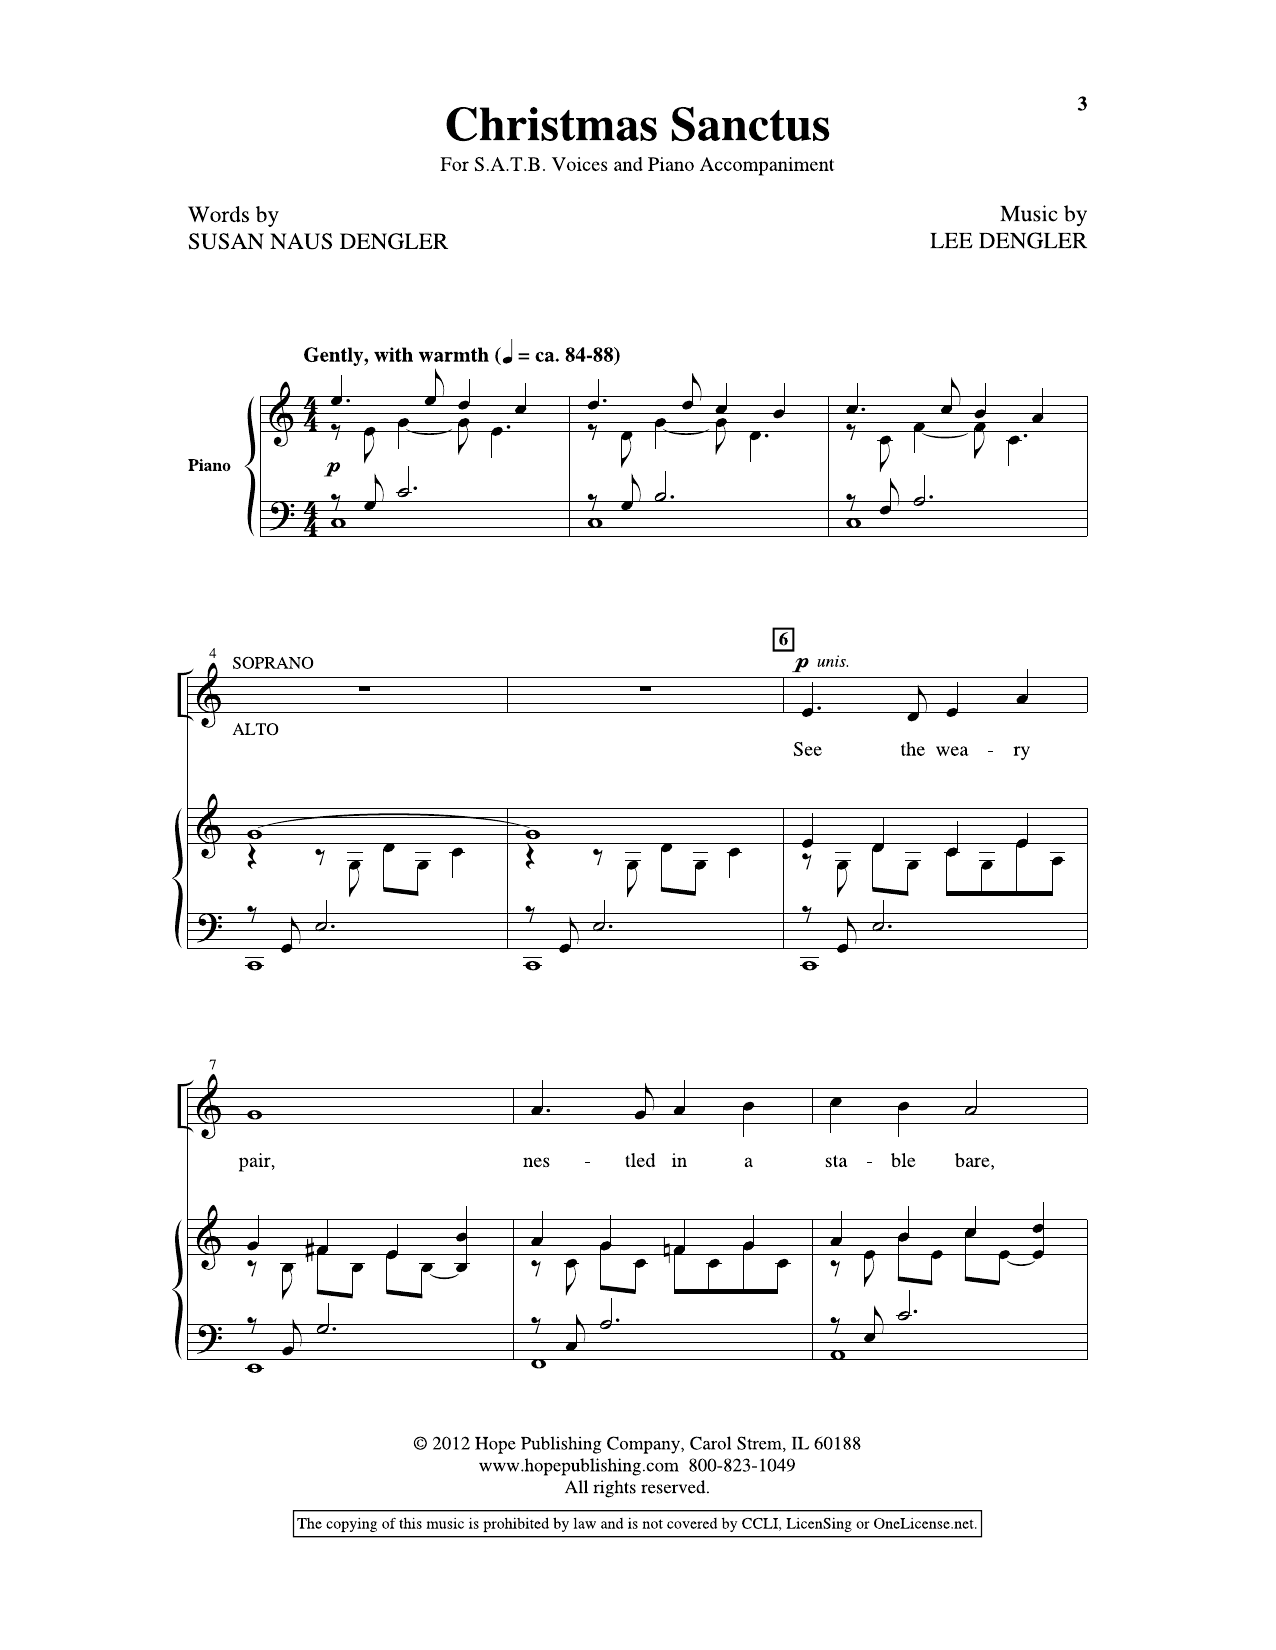 Lee Dengler Christmas Sanctus sheet music notes and chords arranged for SAB Choir